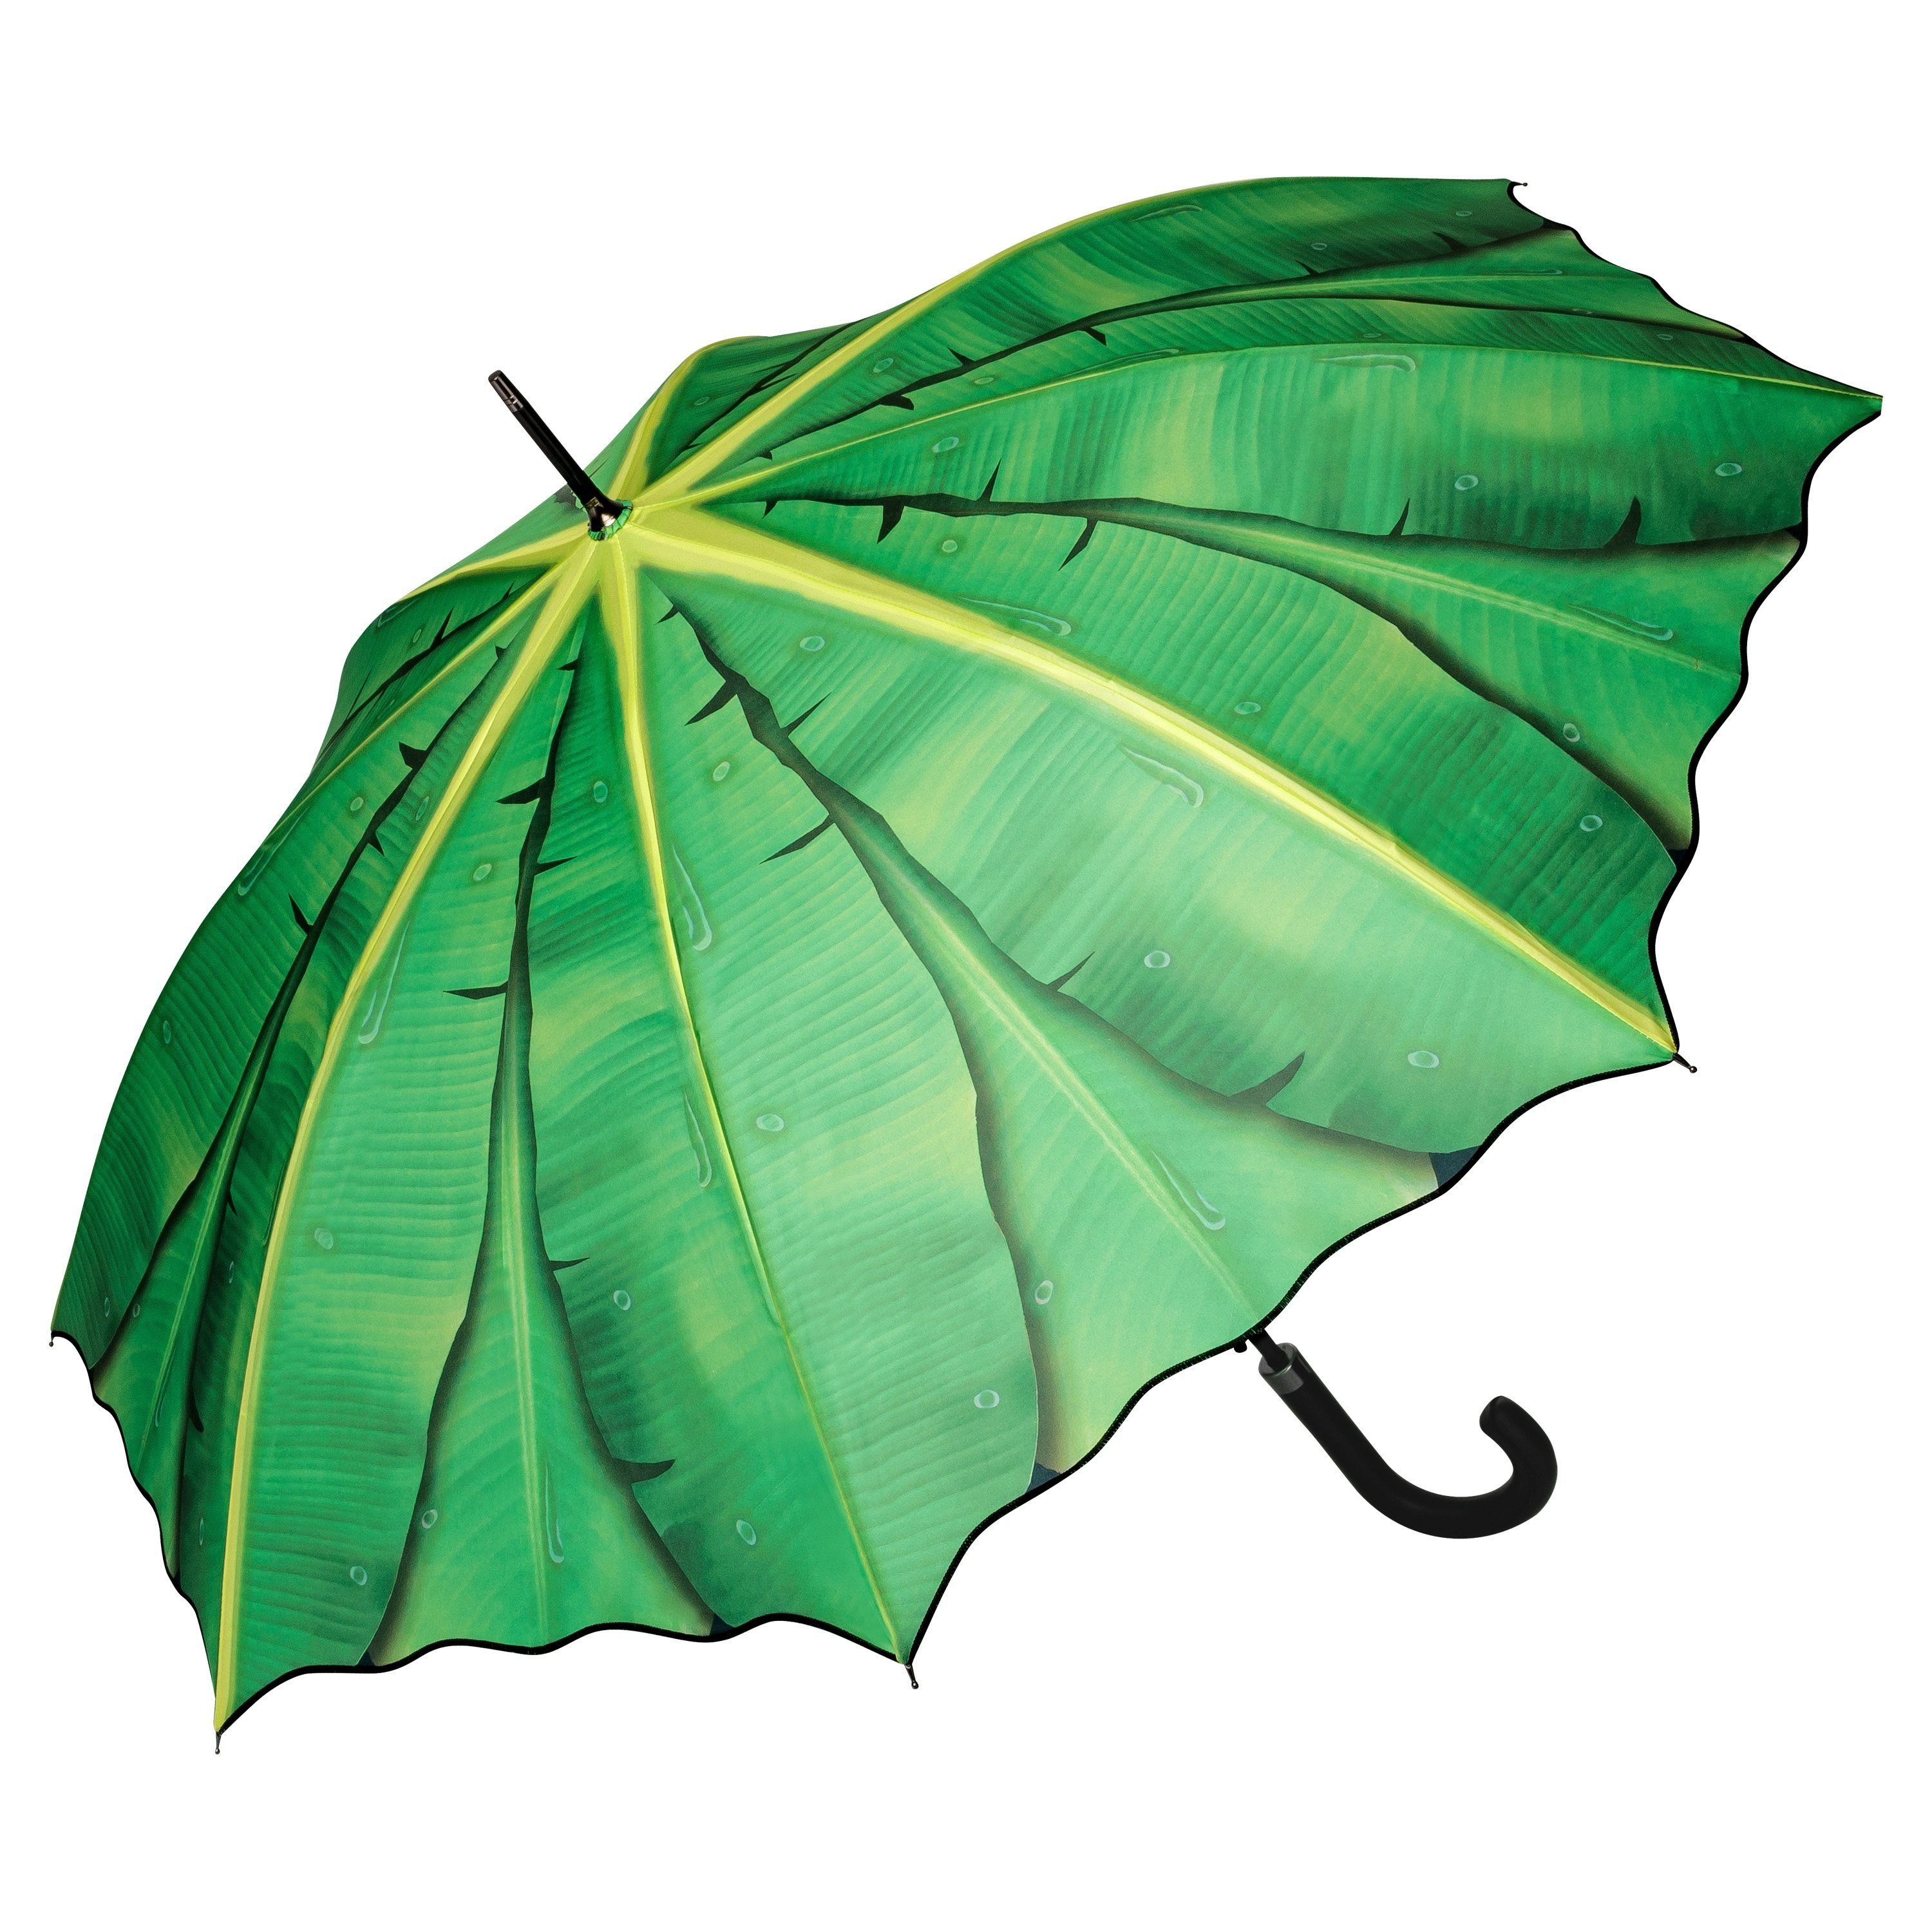 von Lilienfeld Langregenschirm Motivschirm Bananenblatt Auf-Automatik Dschungel Stabil, 100 % Regenschutz / 95 % UV-Schutz